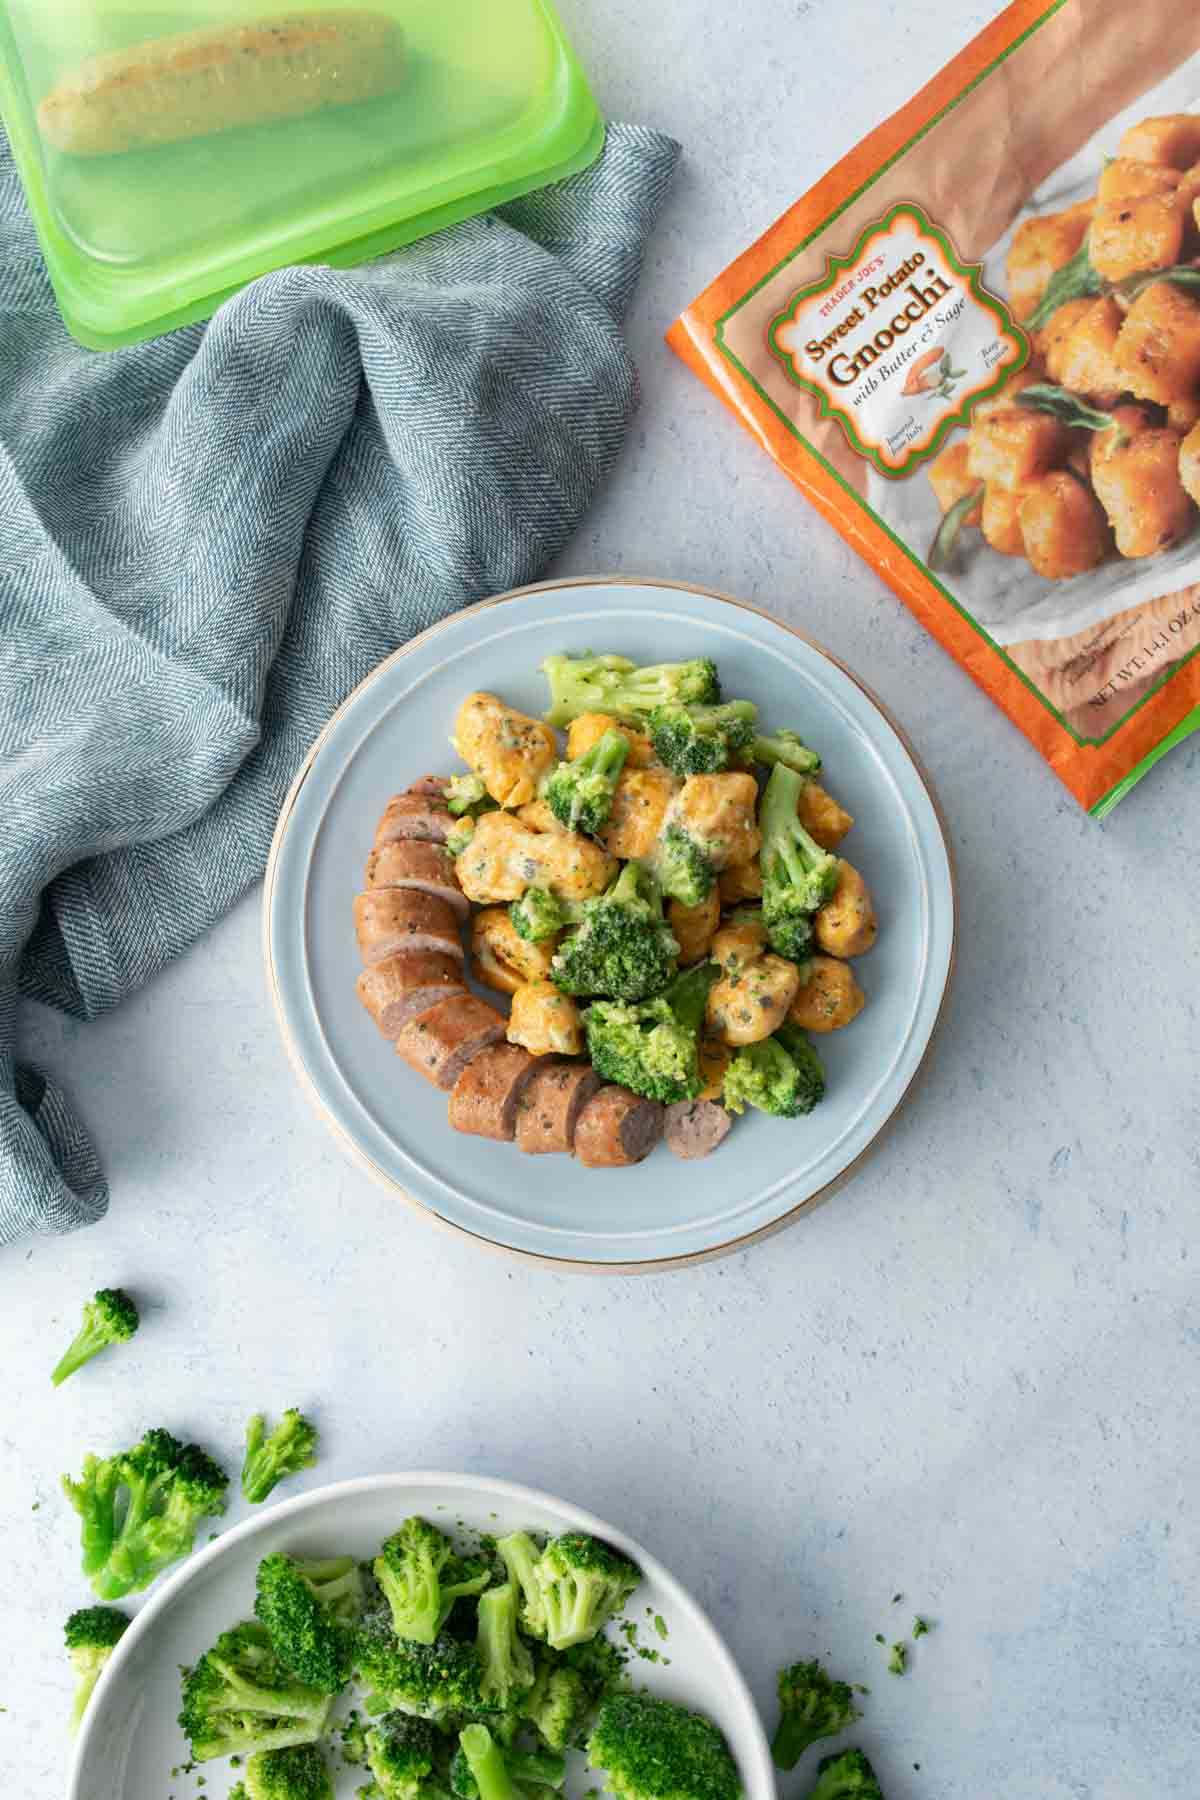 sweet potato gnocchi, broccoli and sliced sausage on blue plate